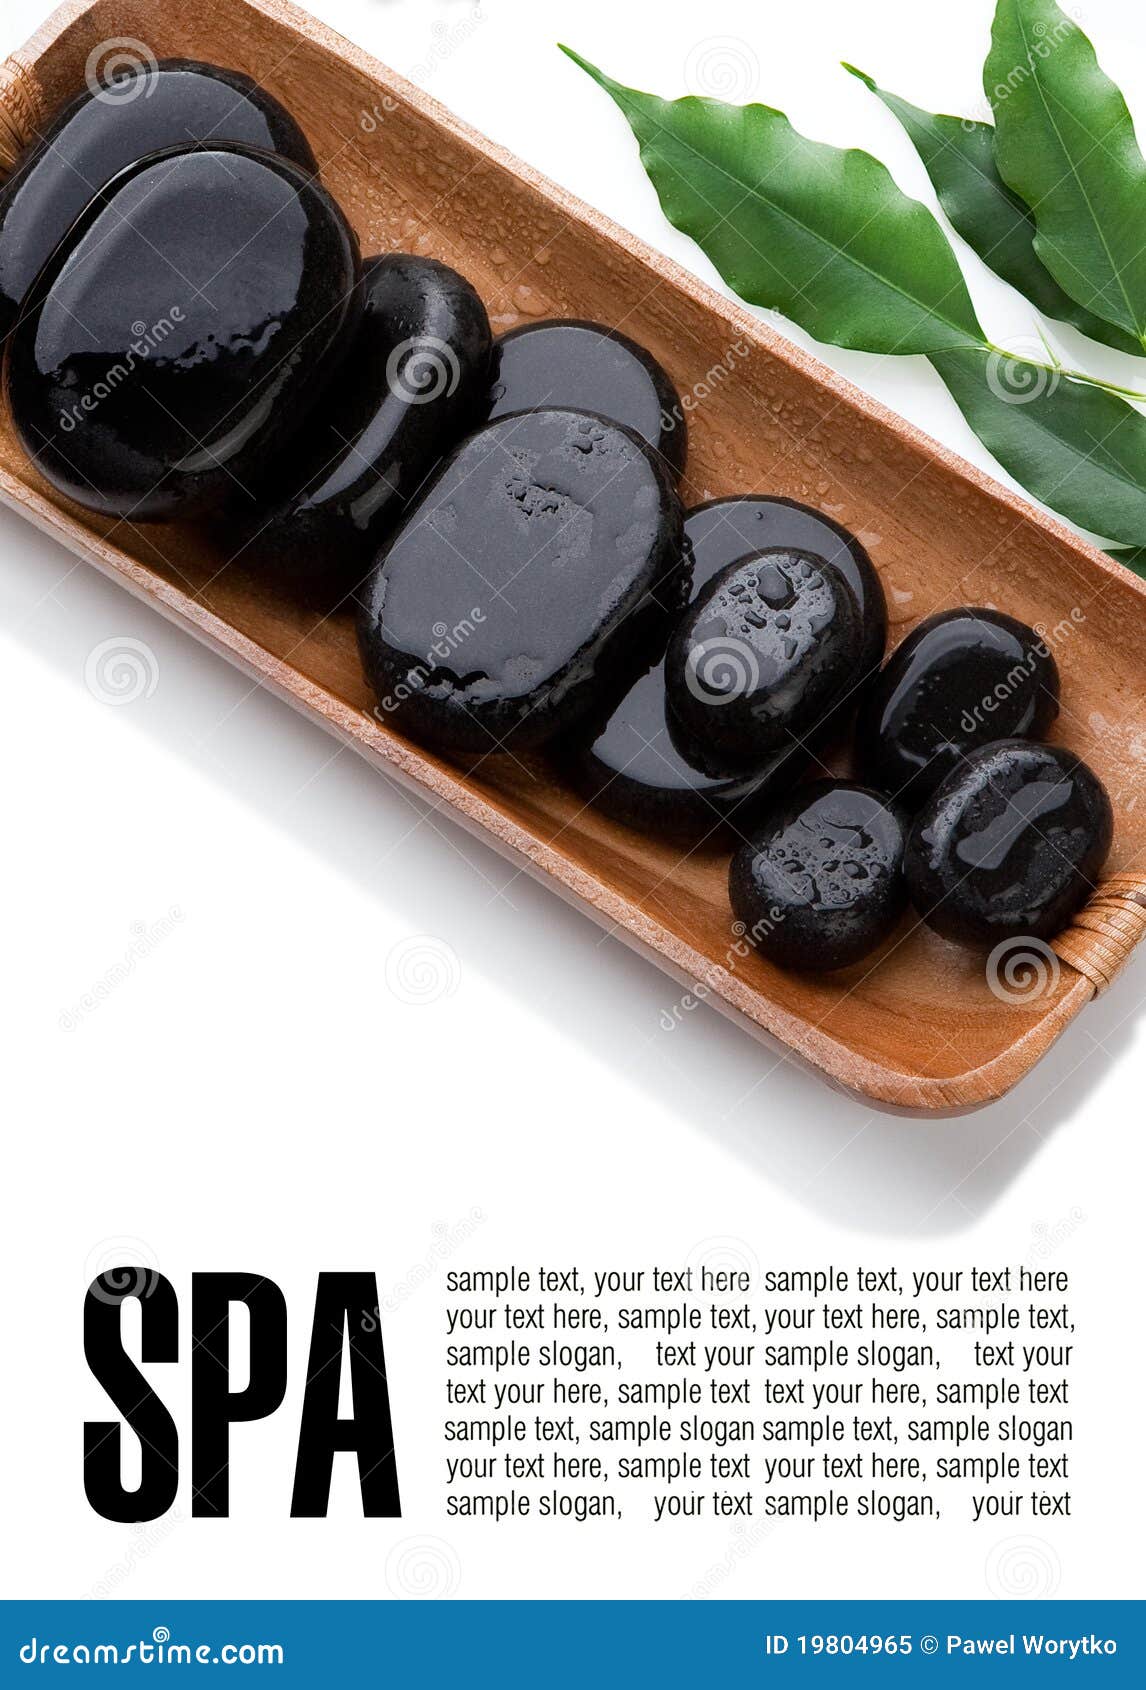 Massage Stones Stock Image Image Of Medicine Like Stack 19804965